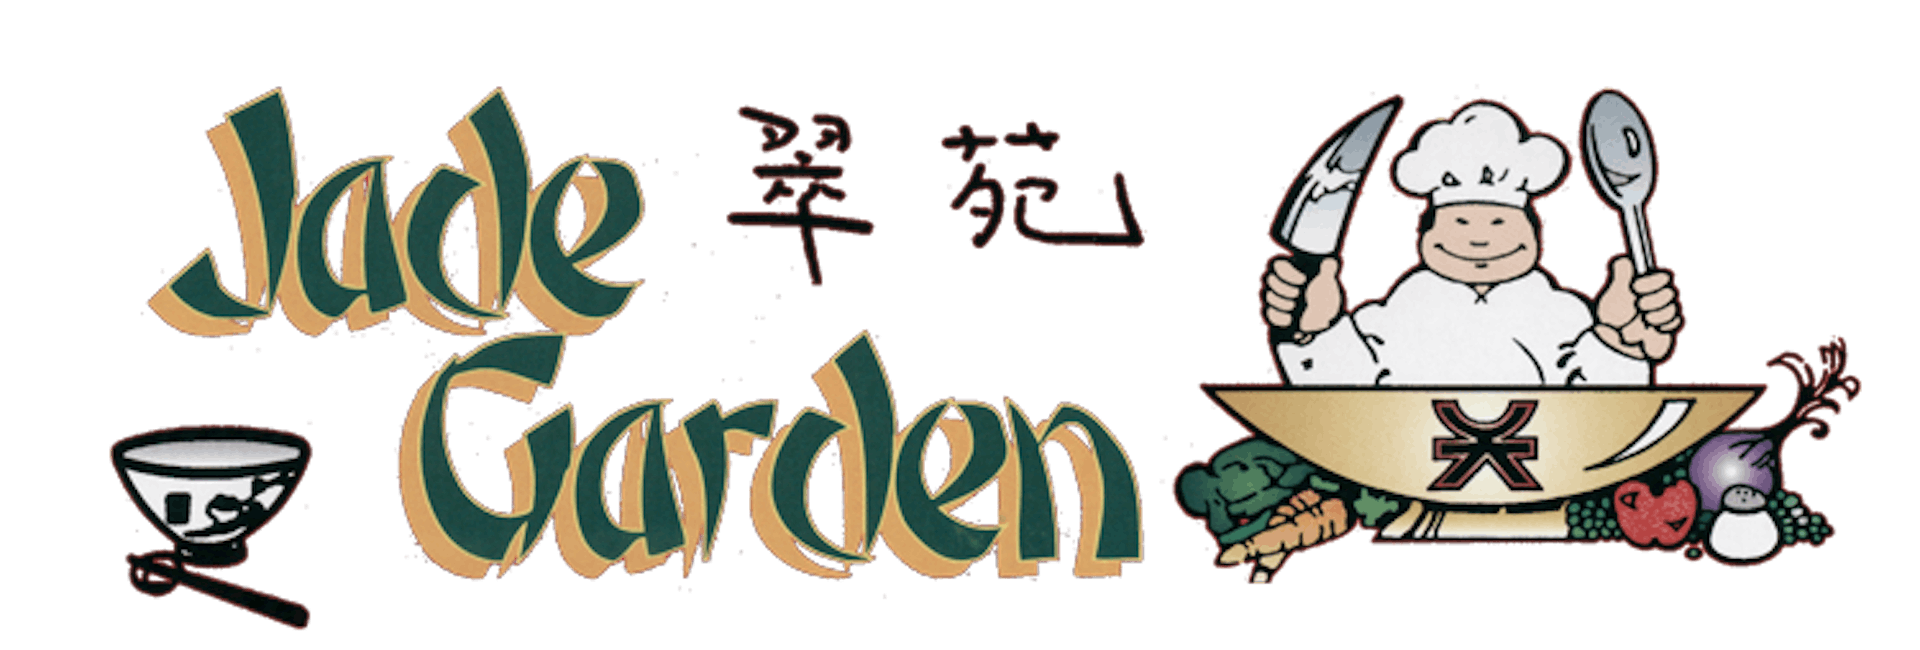 Jade Garden Lawrence Ks 66049 Menu Order Online